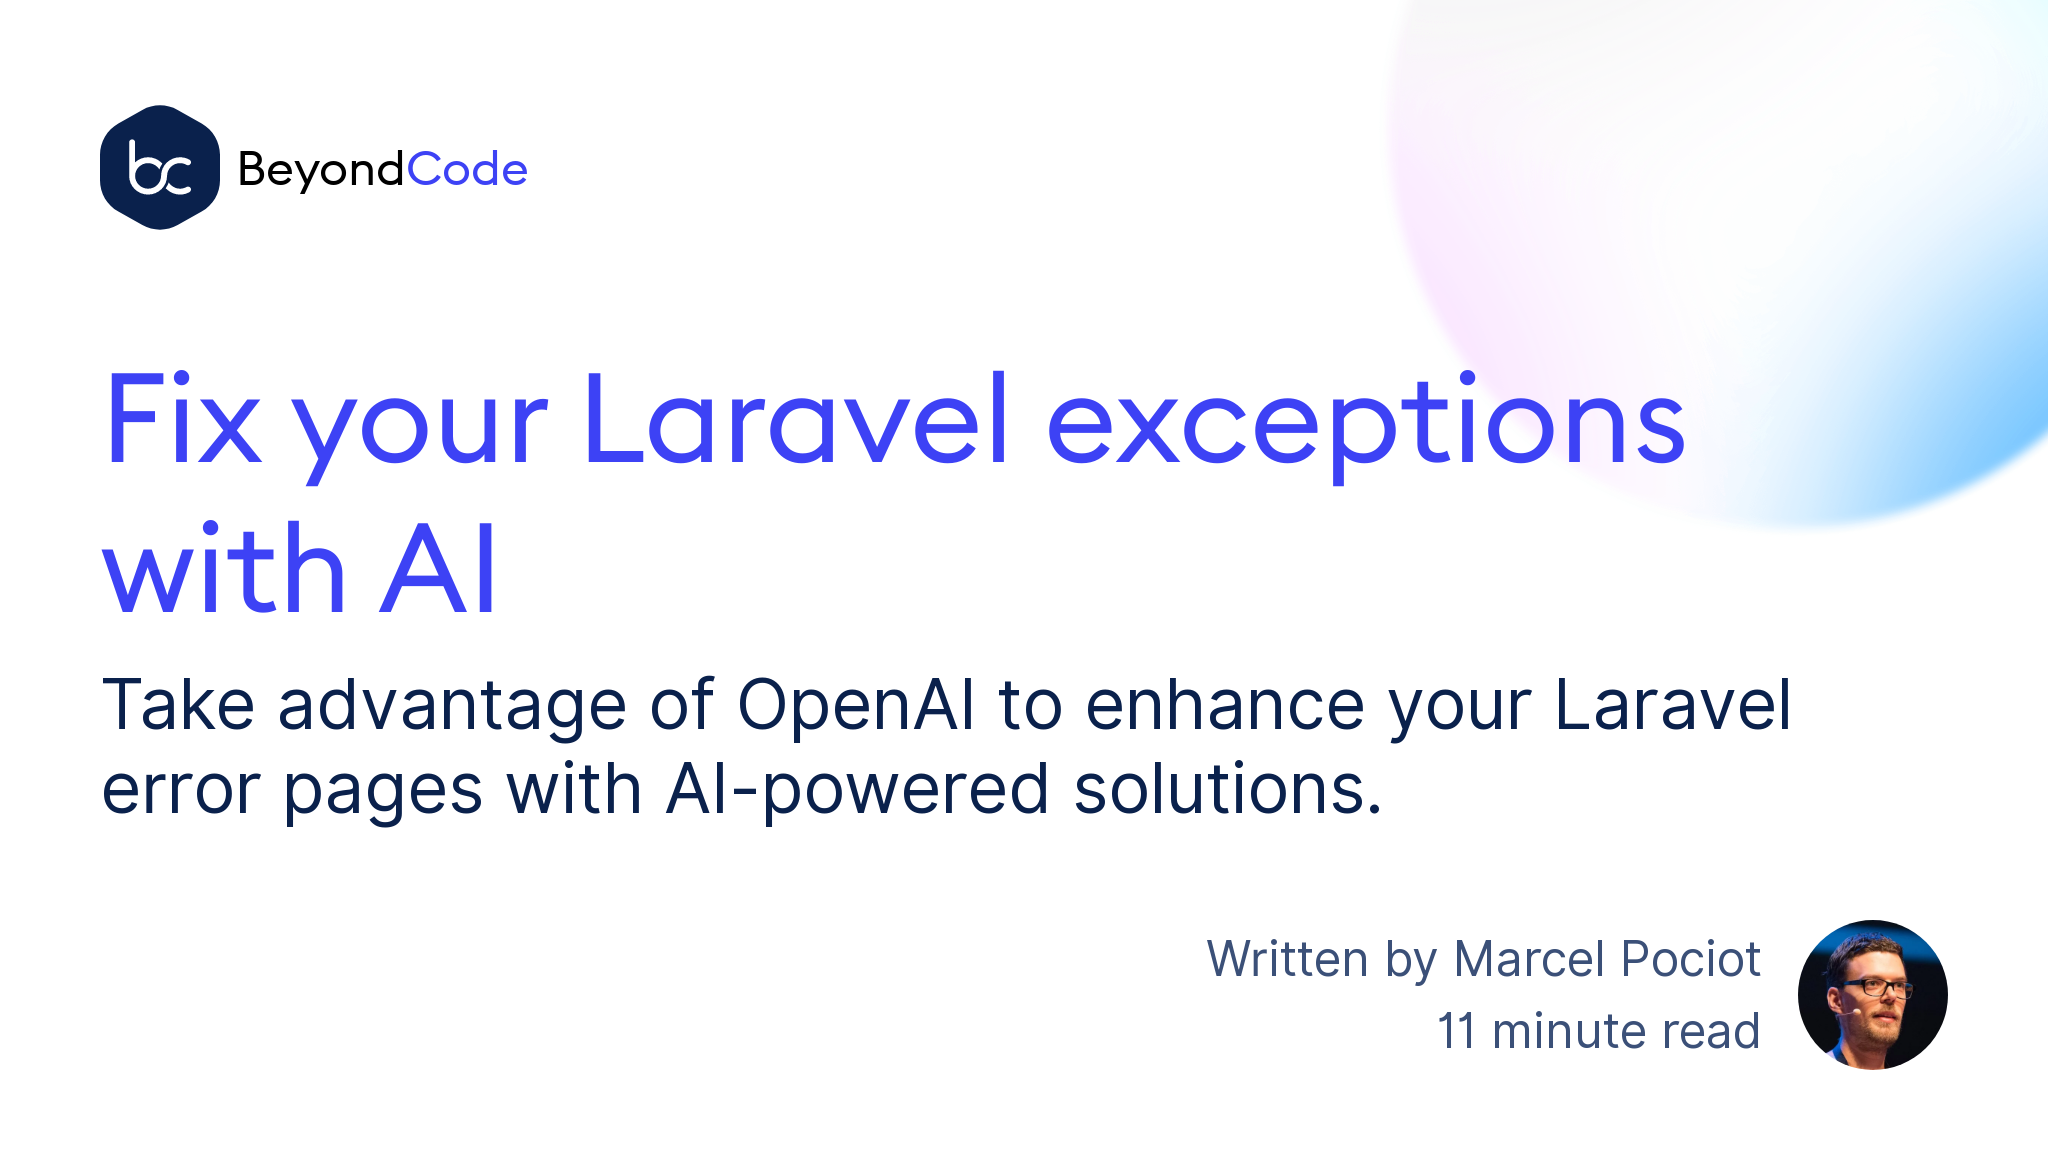 Send Email Alert to Admin when Error Exceptions occurs in Laravel - Dwij -  An Open Source Bird